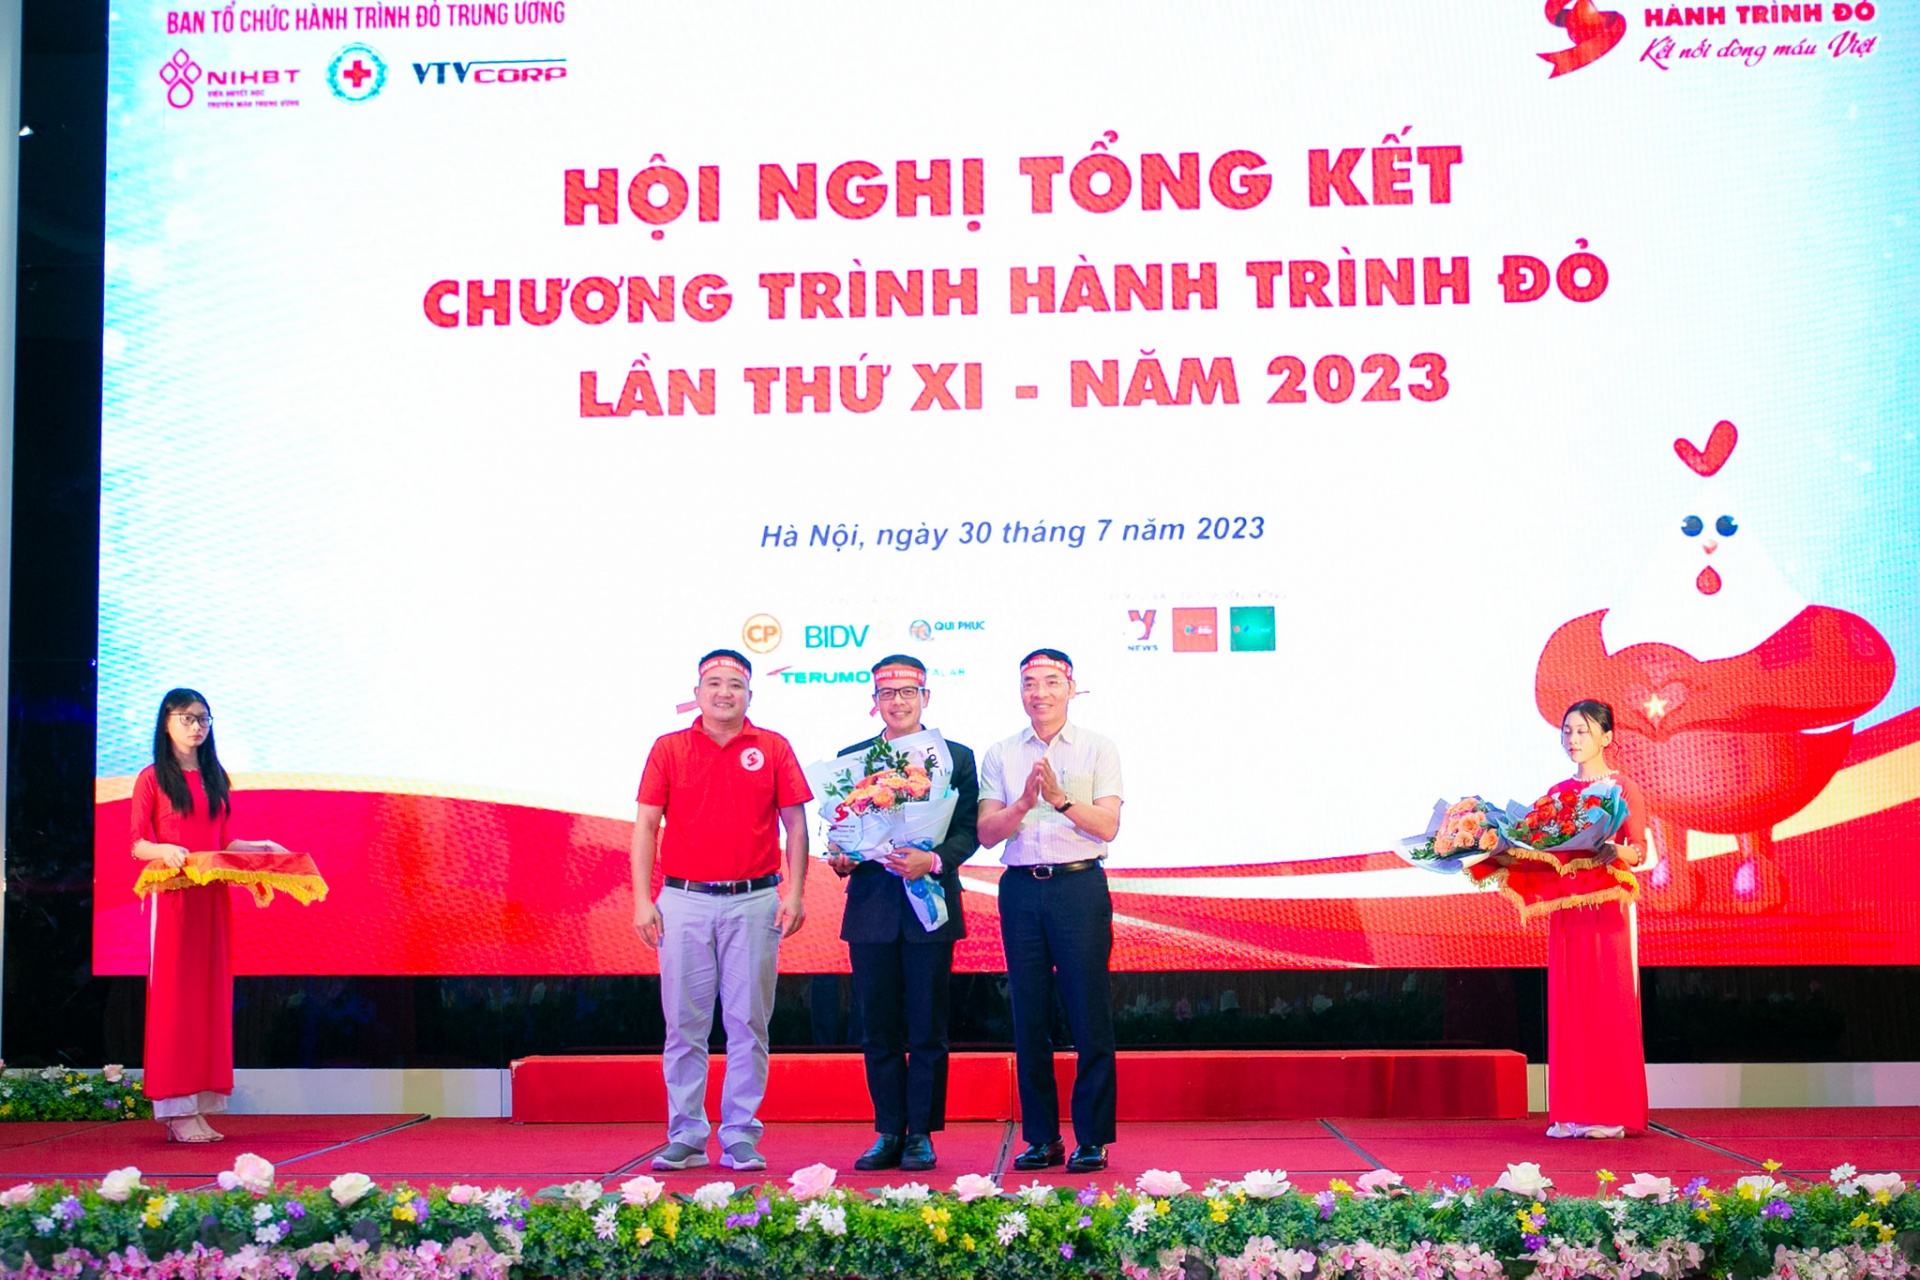 C.P. Vietnam contributes to Red Journey